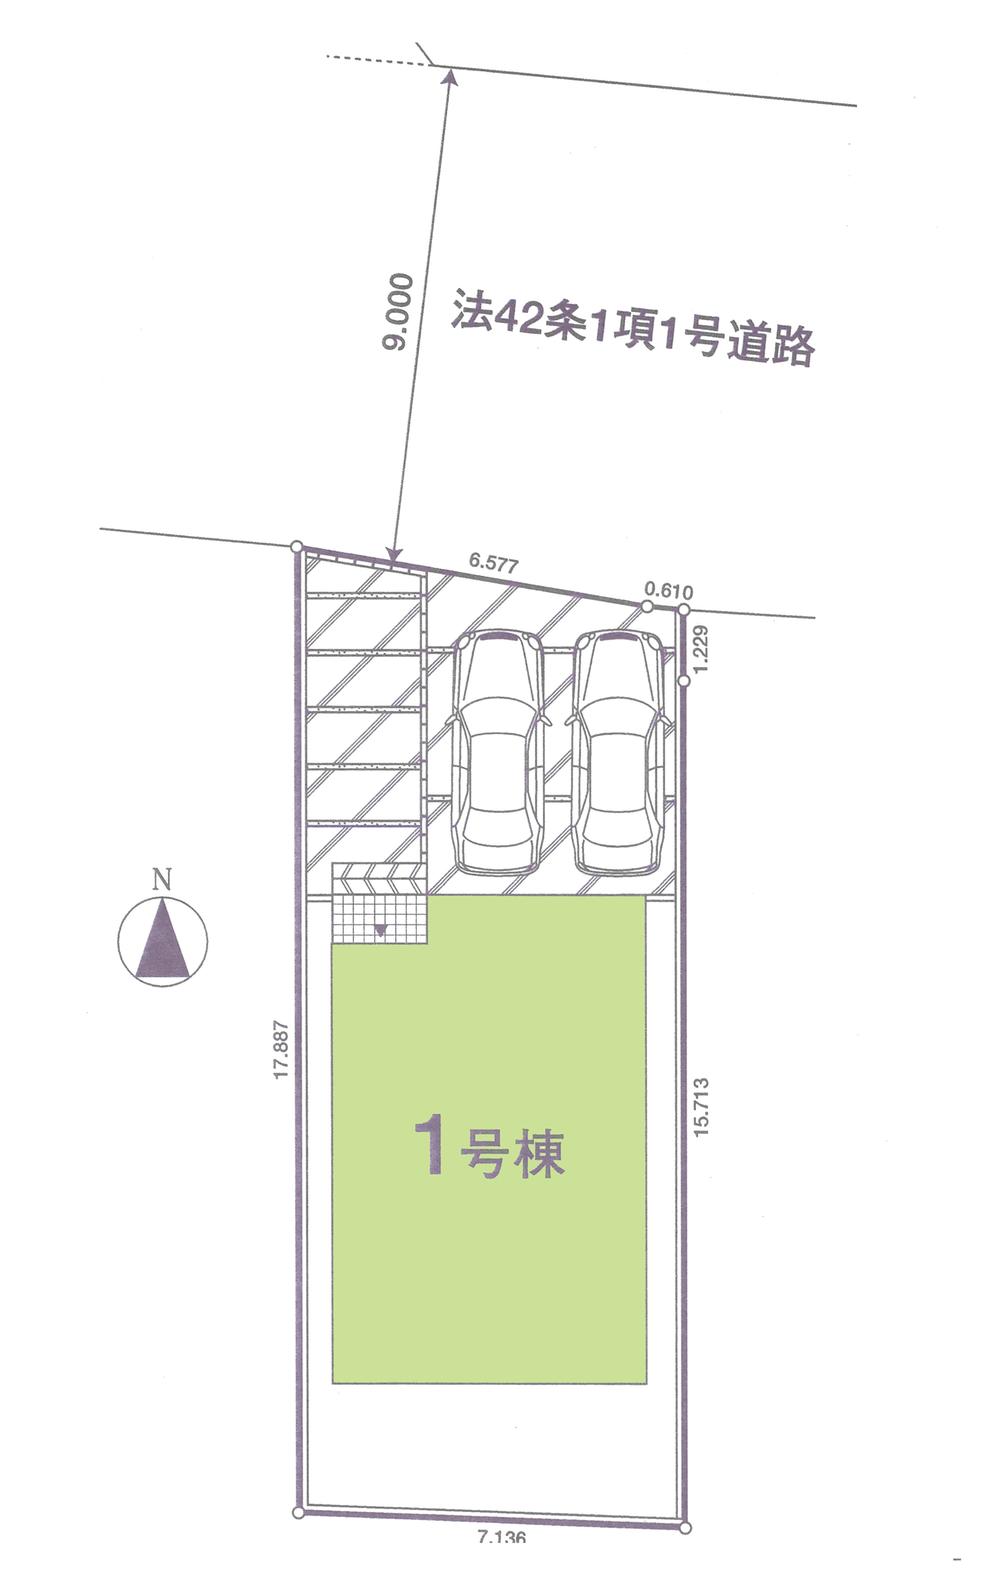 Compartment figure. 21,800,000 yen, 4LDK, Land area 124.03 sq m , Building area 98.01 sq m compartment view